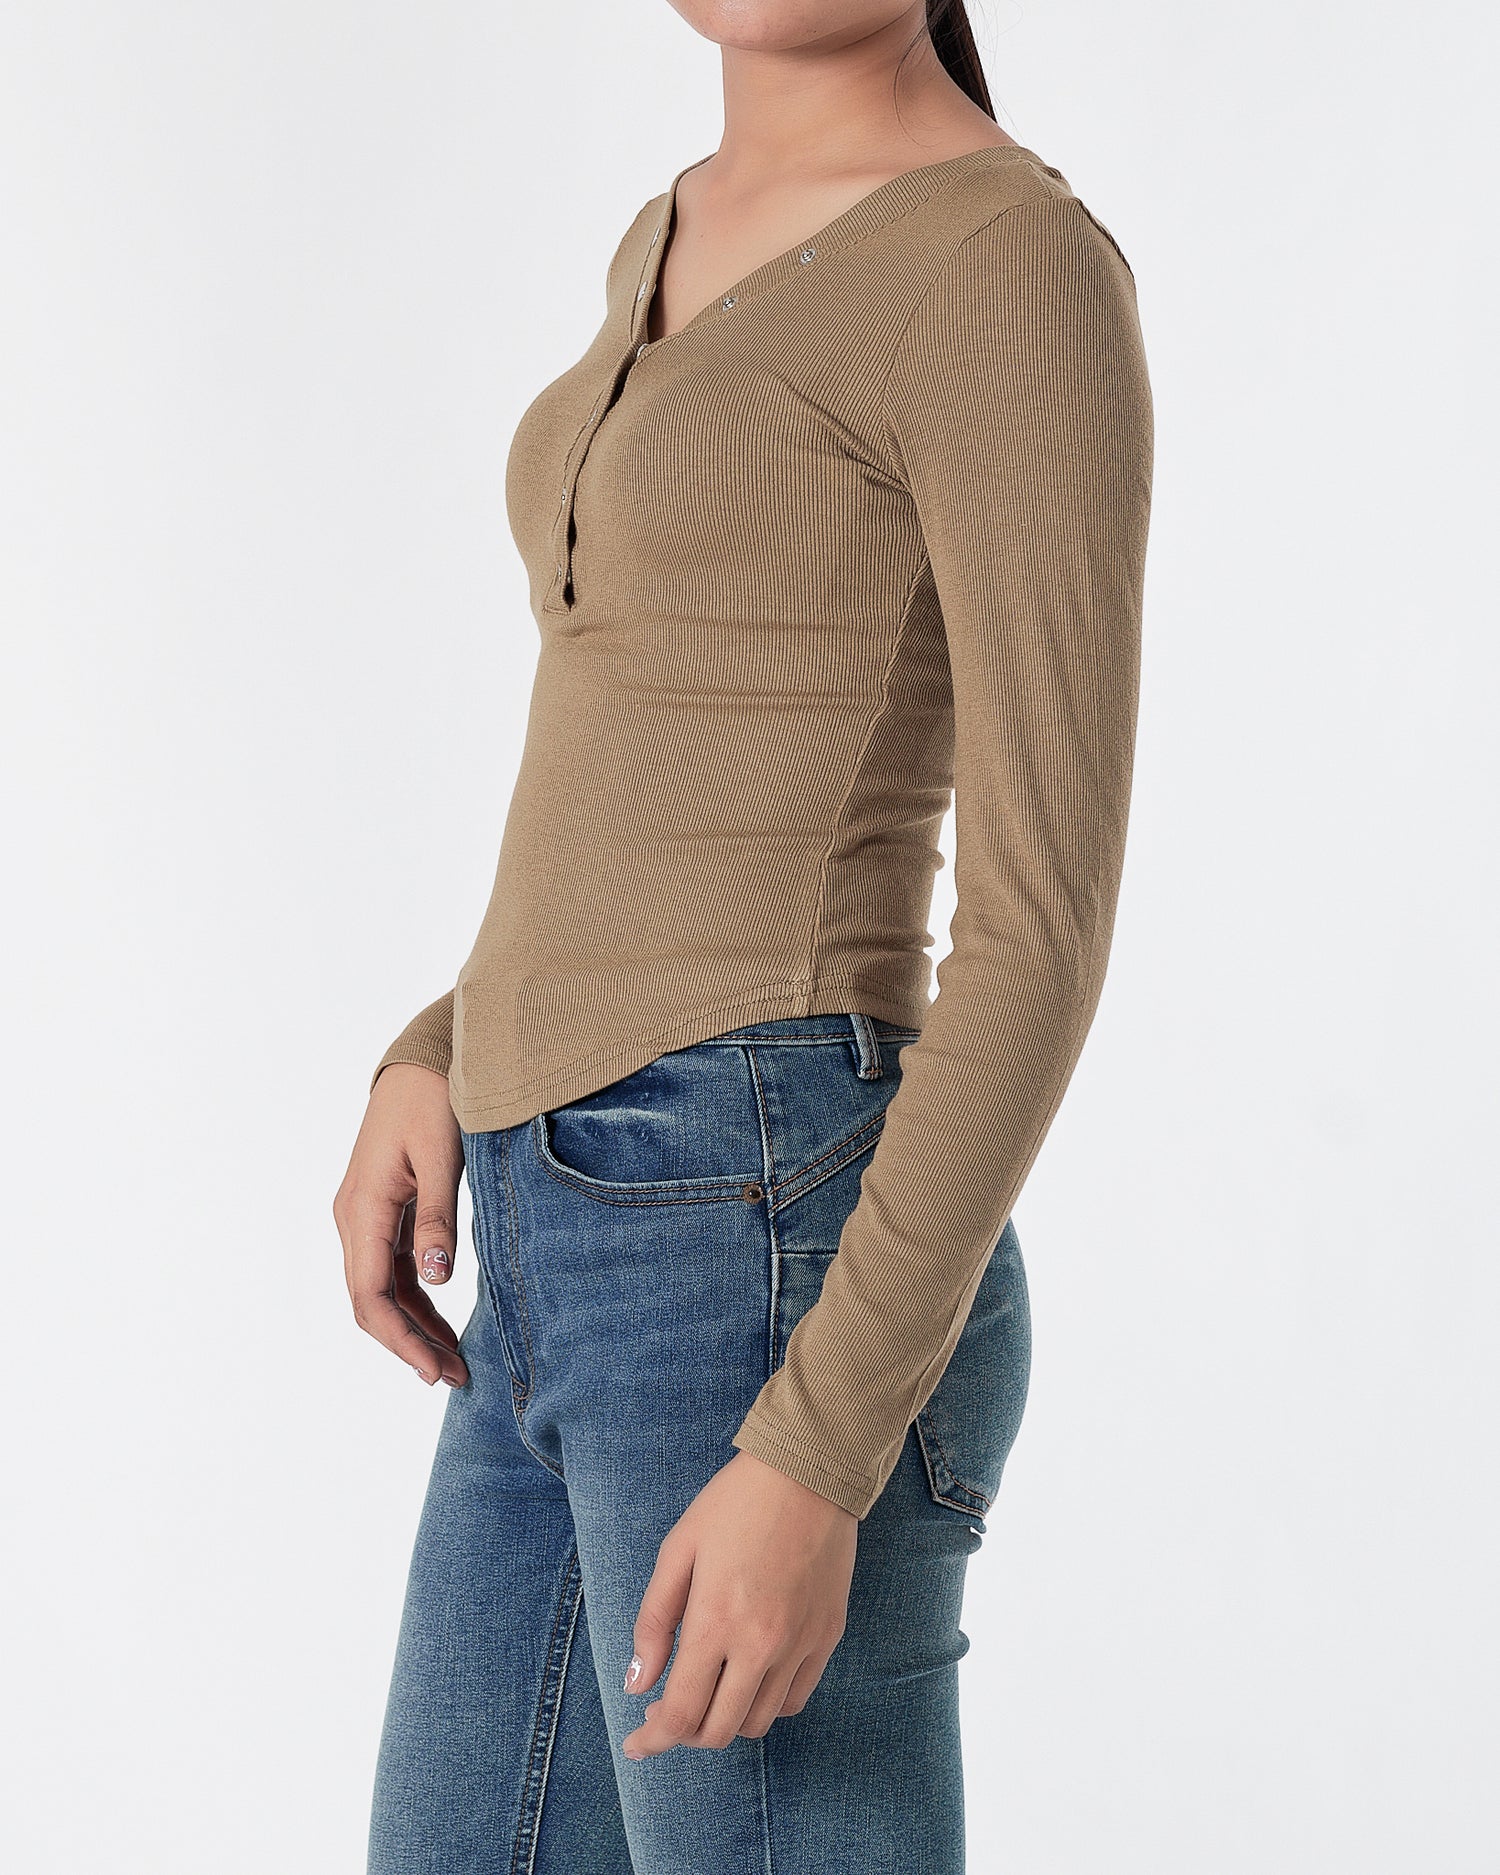 Lady V Neck Brown T-Shirt Long Sleeve 12.90